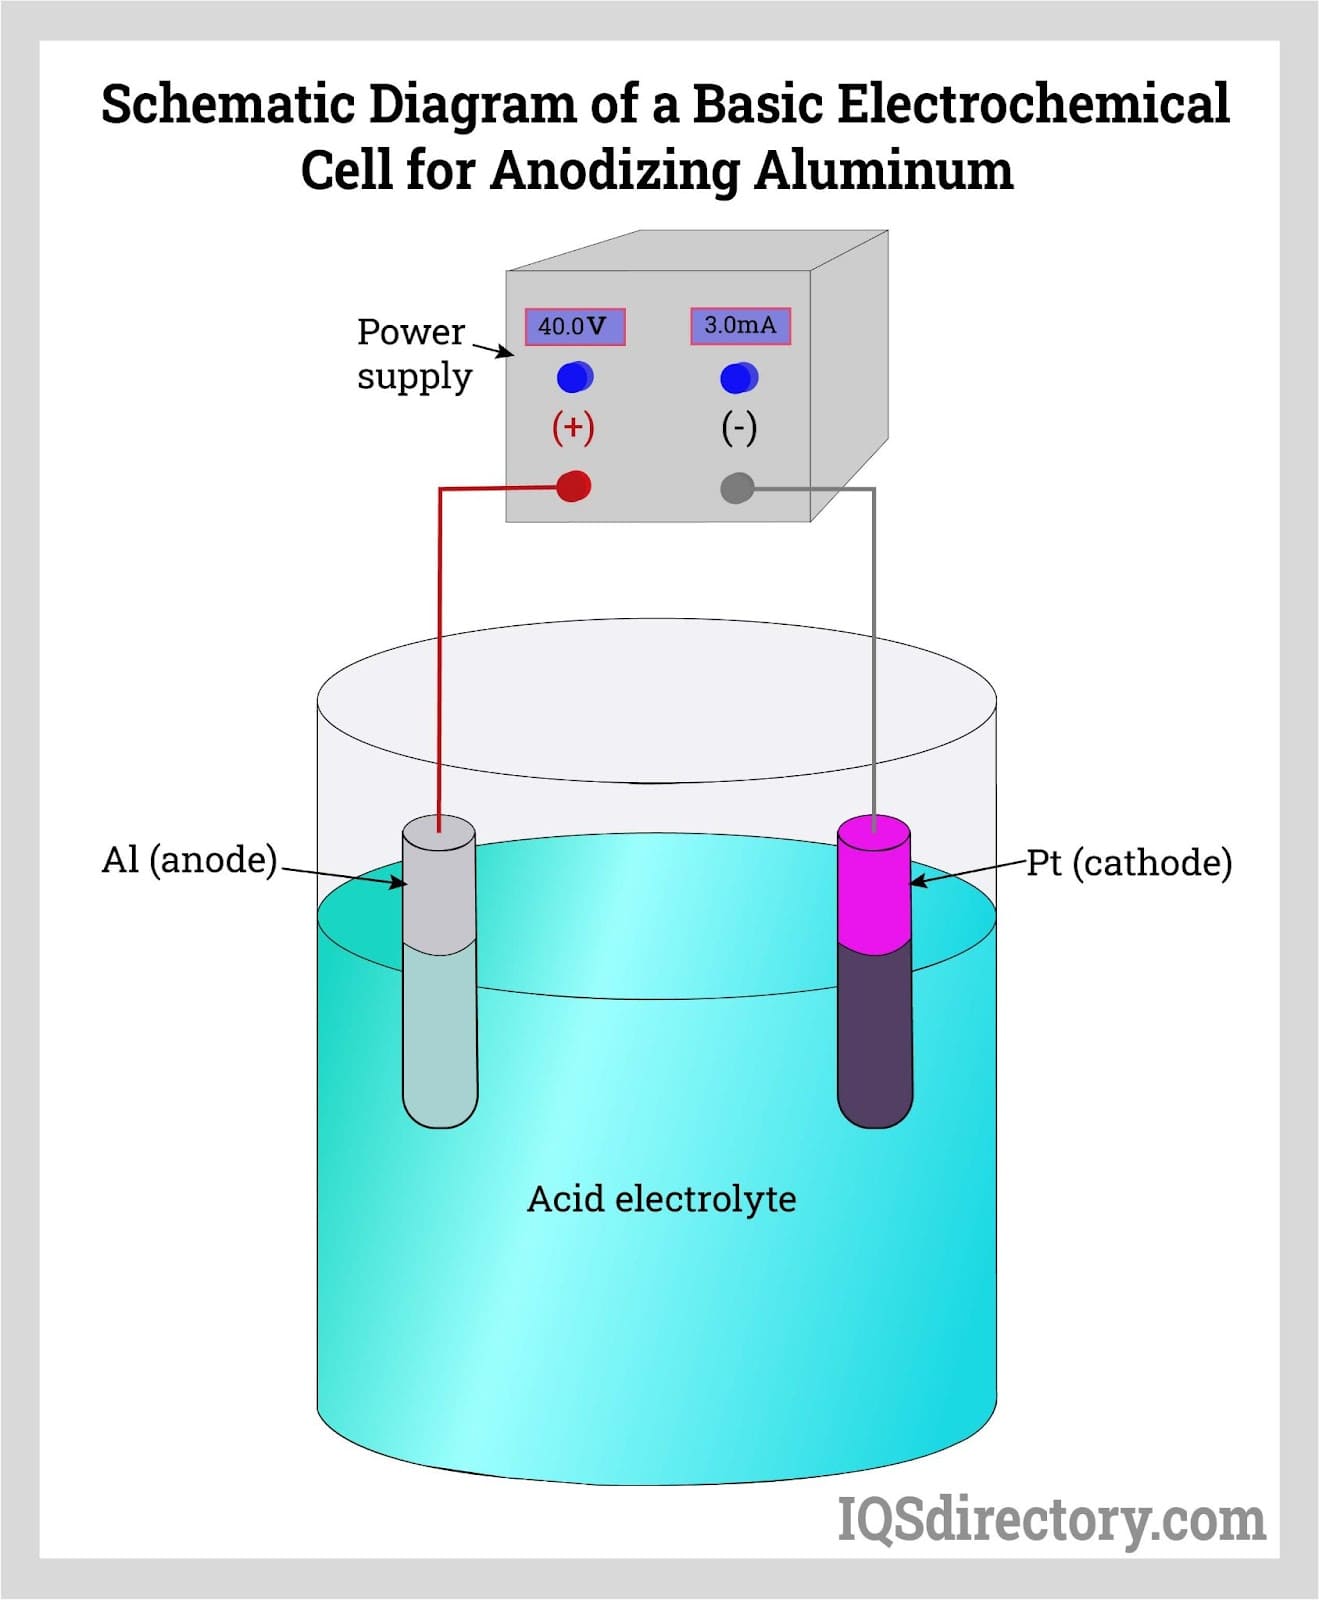 anodized aluminum, aluminum anodizing